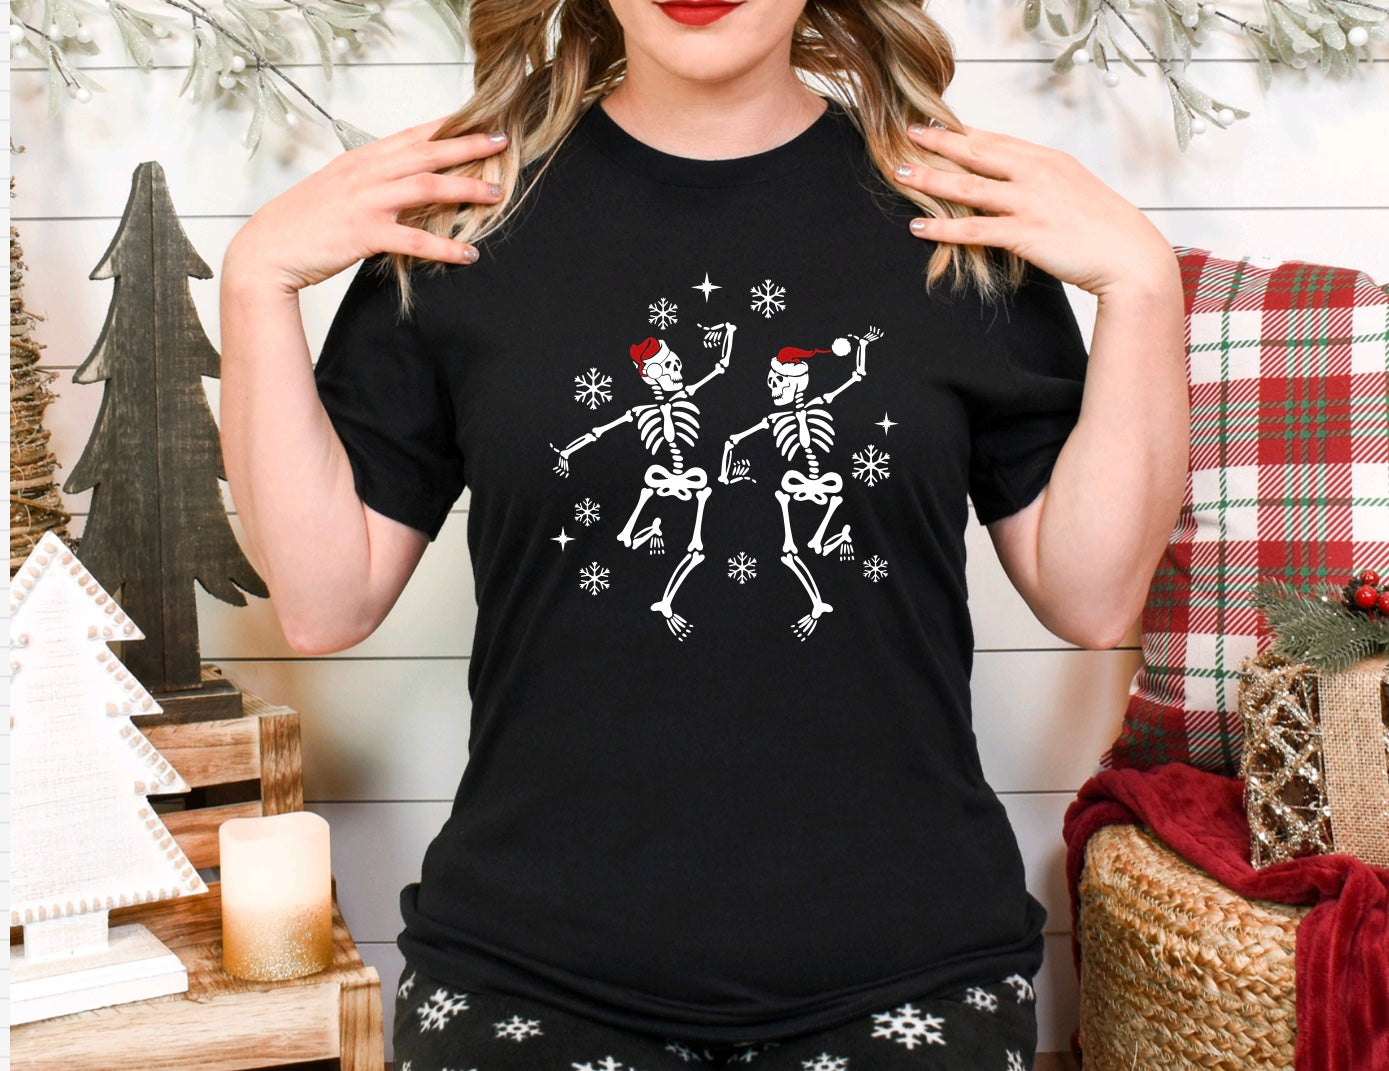 Dancing skeletons with Santa hats unisex Christmas t-shirt in black 